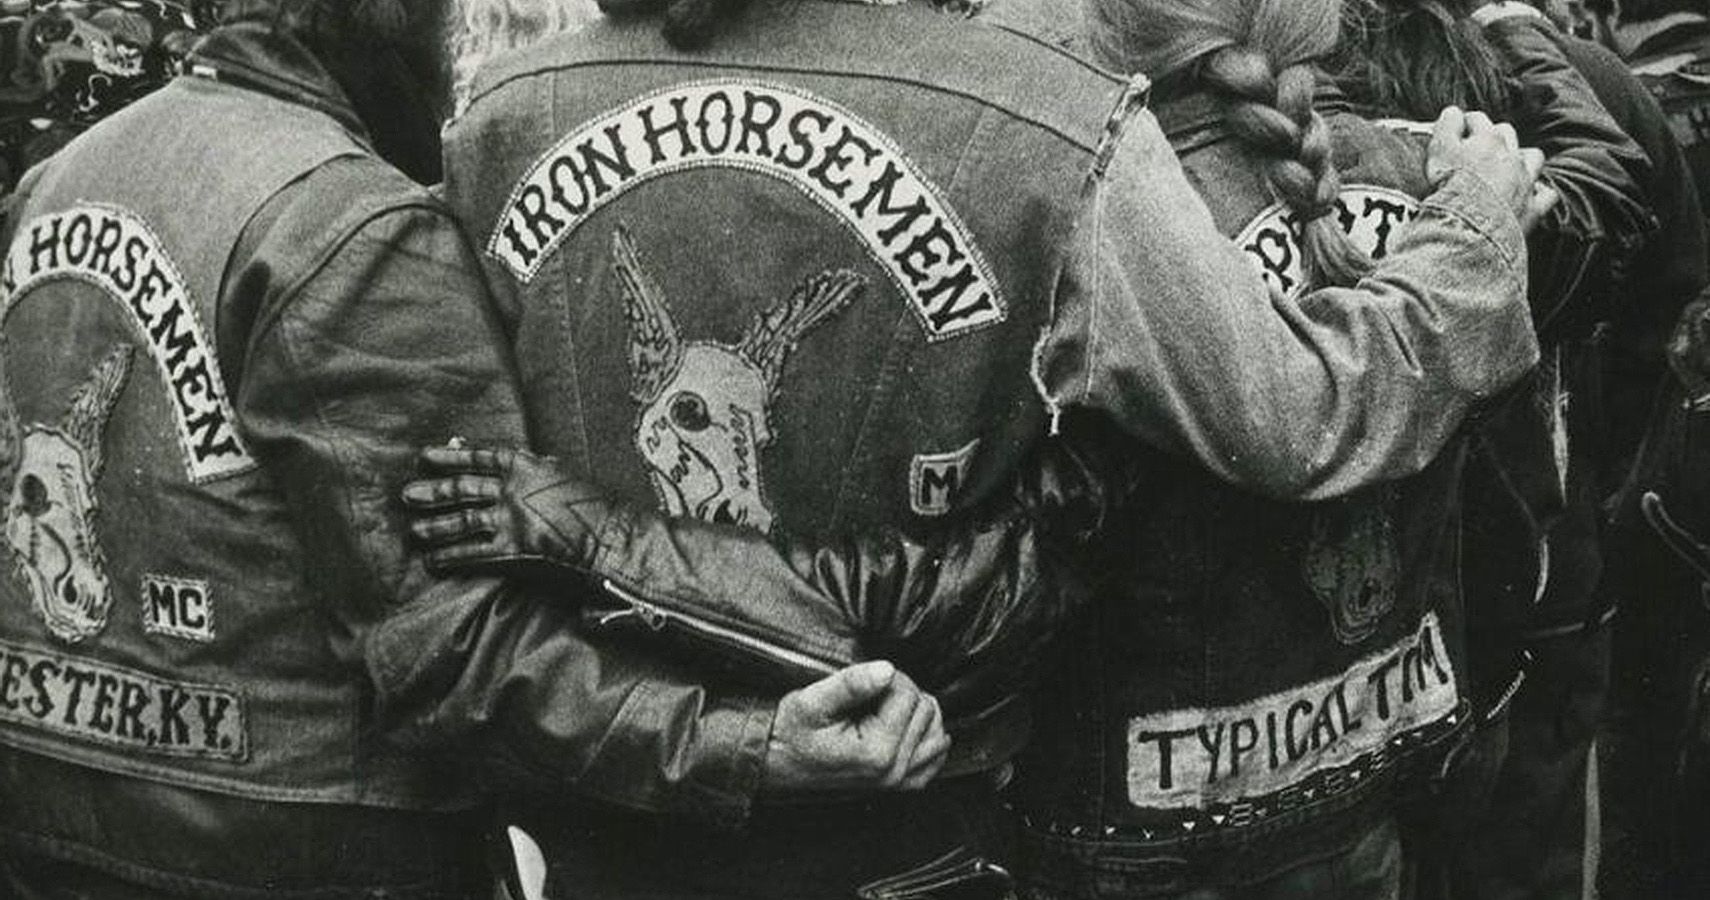 15 Vintage Pics Of The Iron Horsemen Motorcycle Club